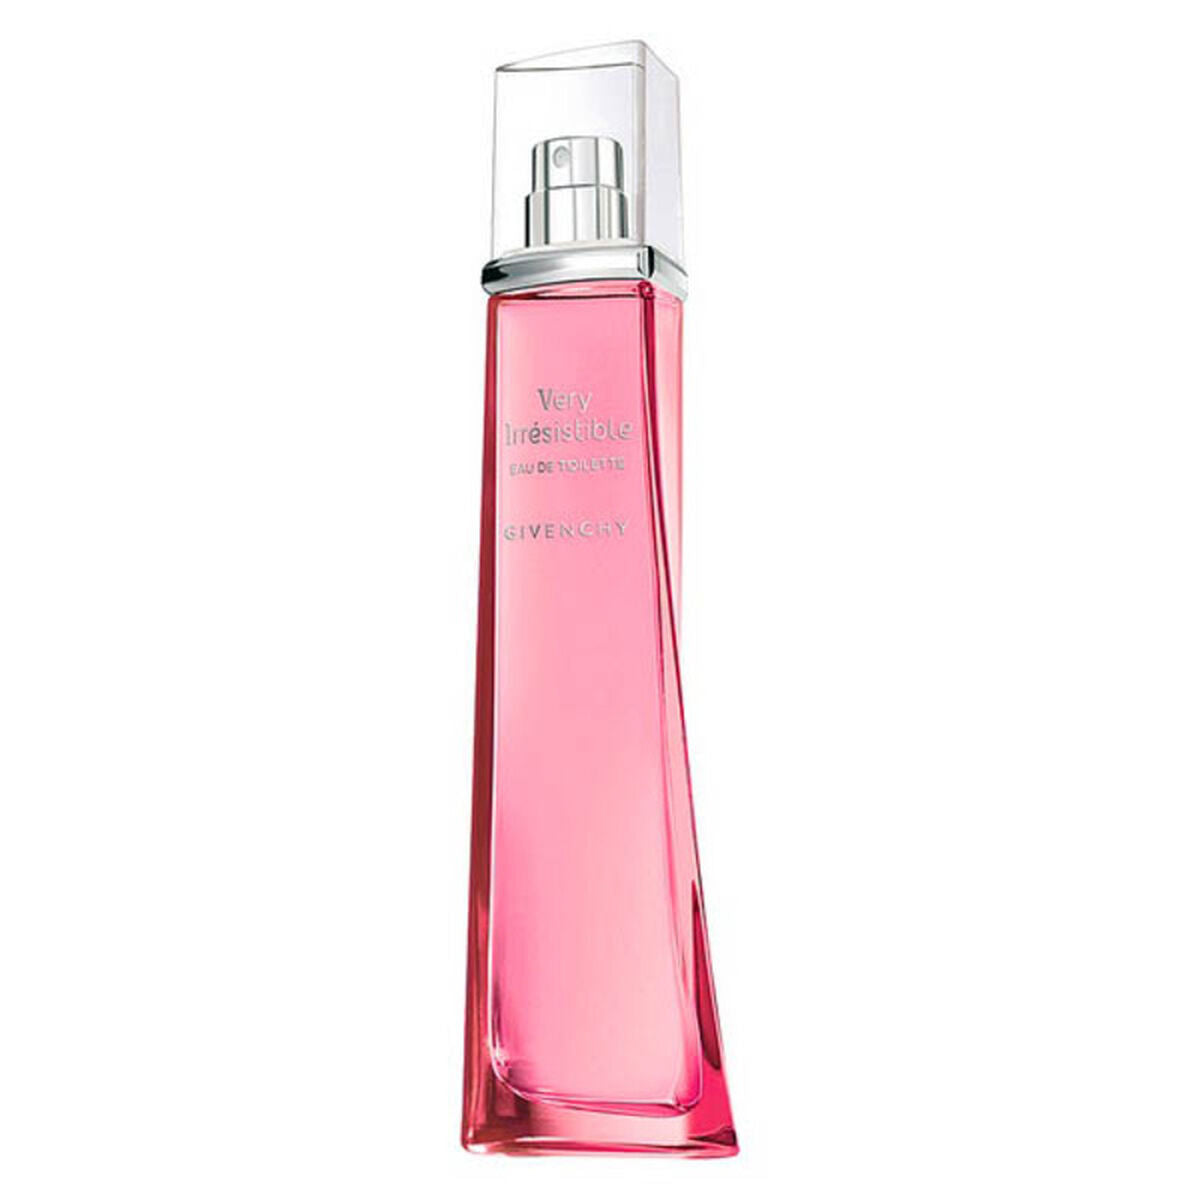 Women's Perfume Very Givenchy ETD-0